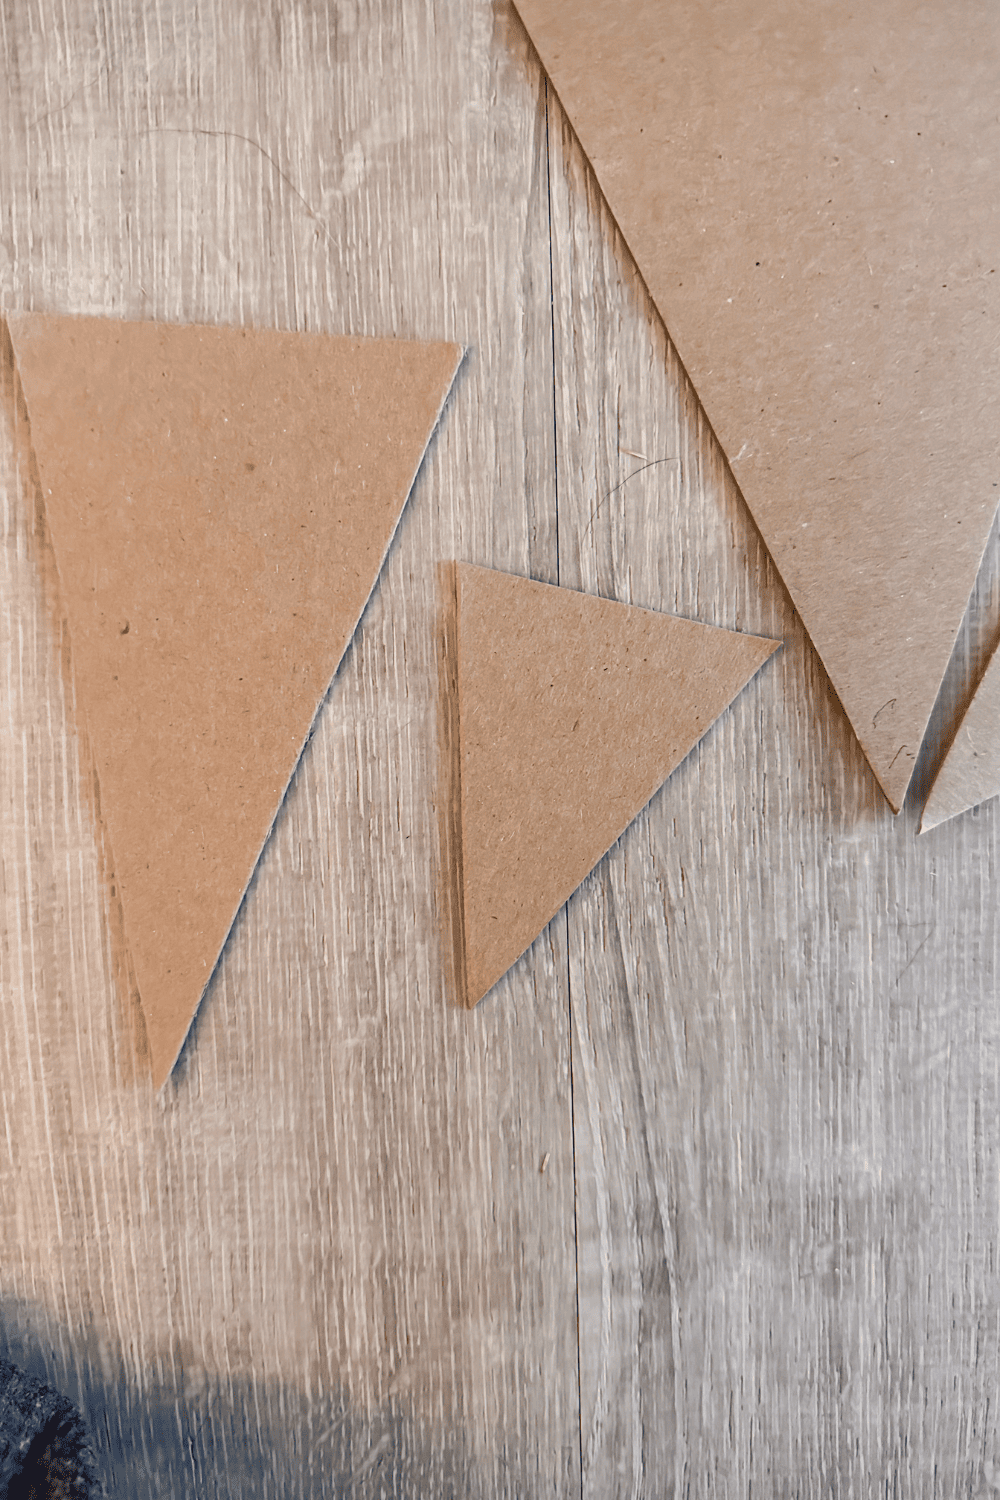 Cardboard triangles